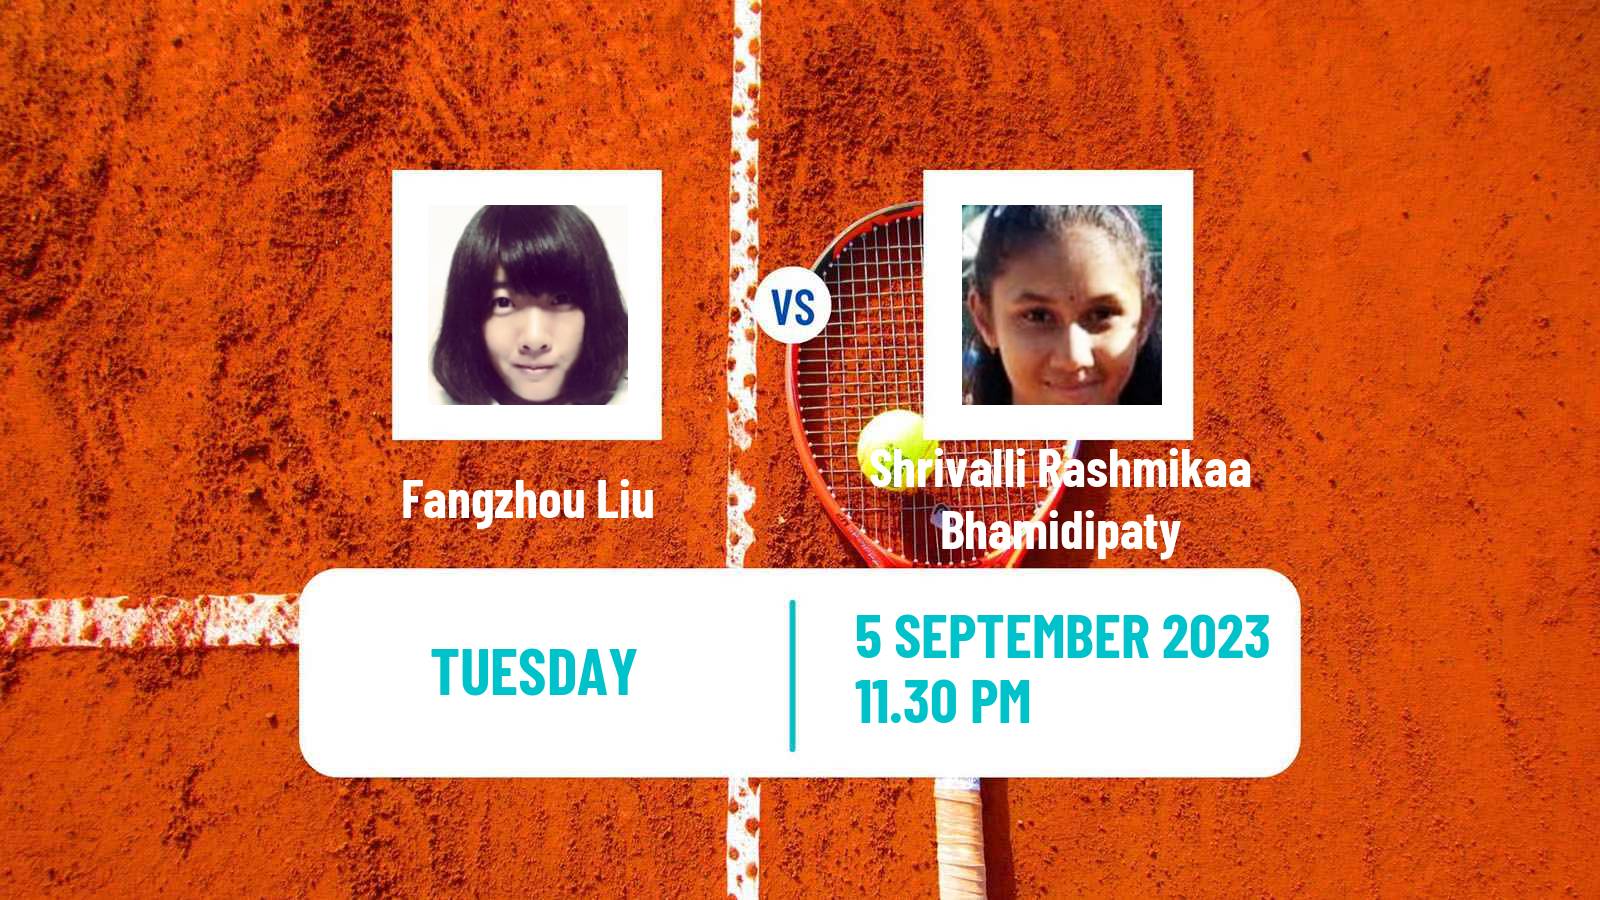 Tennis ITF W25 Nakhon Si Thammarat 4 Women Fangzhou Liu - Shrivalli Rashmikaa Bhamidipaty